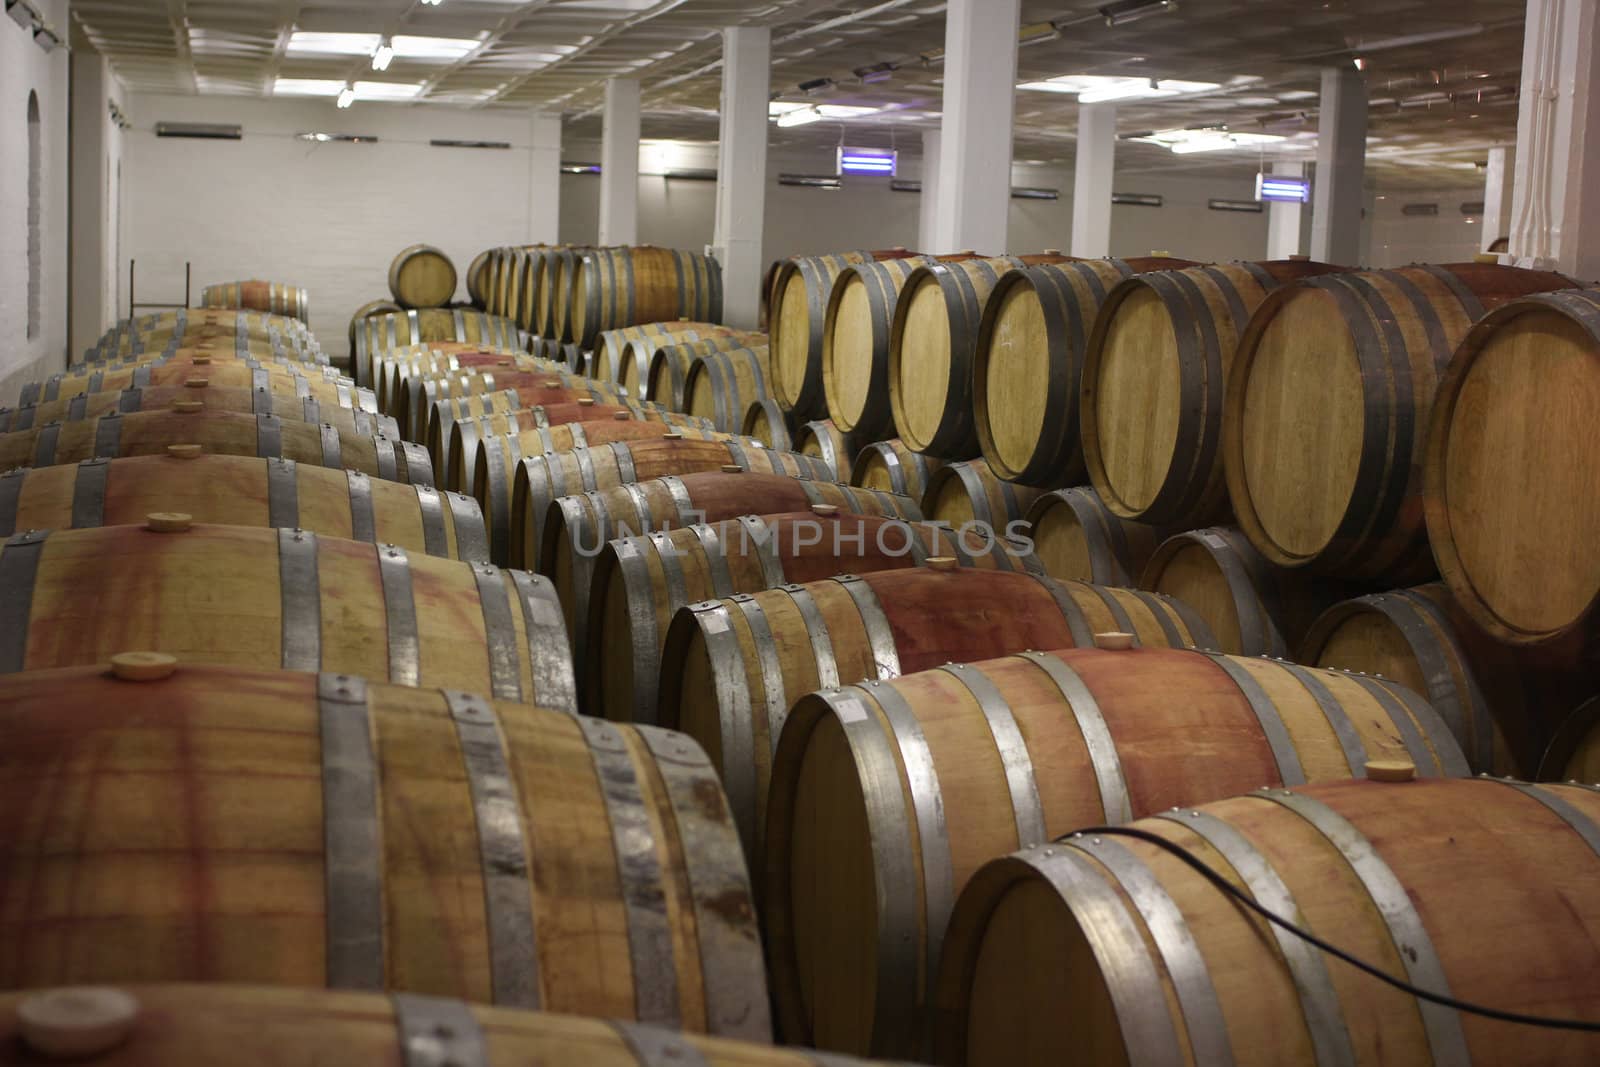 Inside of a Wine cellar full of wooden barrels